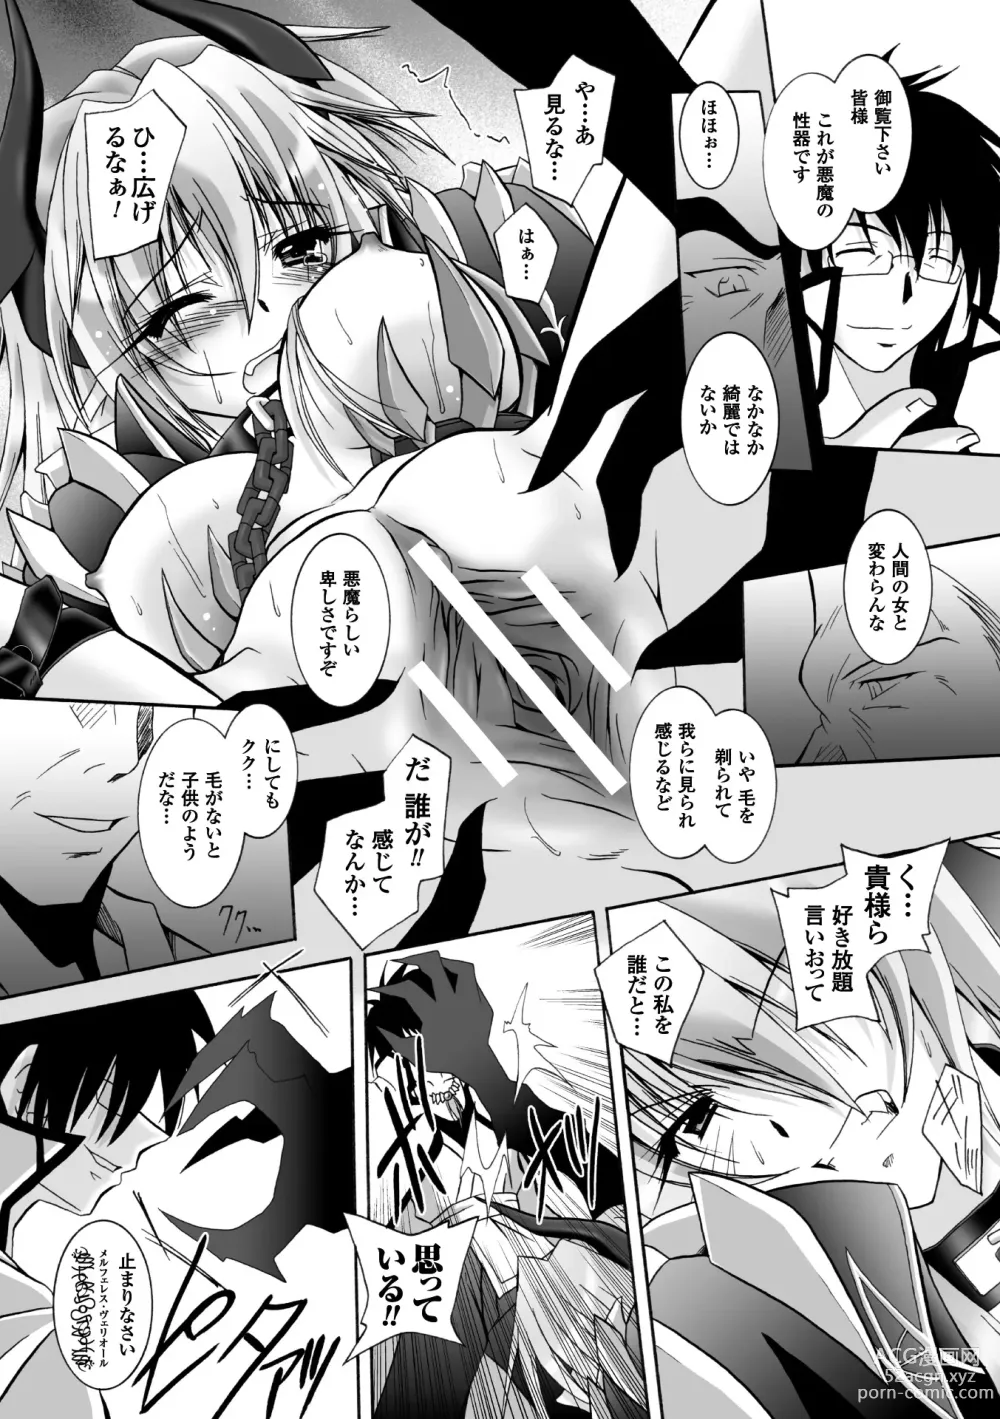 Page 13 of manga Datenshi-tachi no Chinkonka - Fallen Angels Requiem